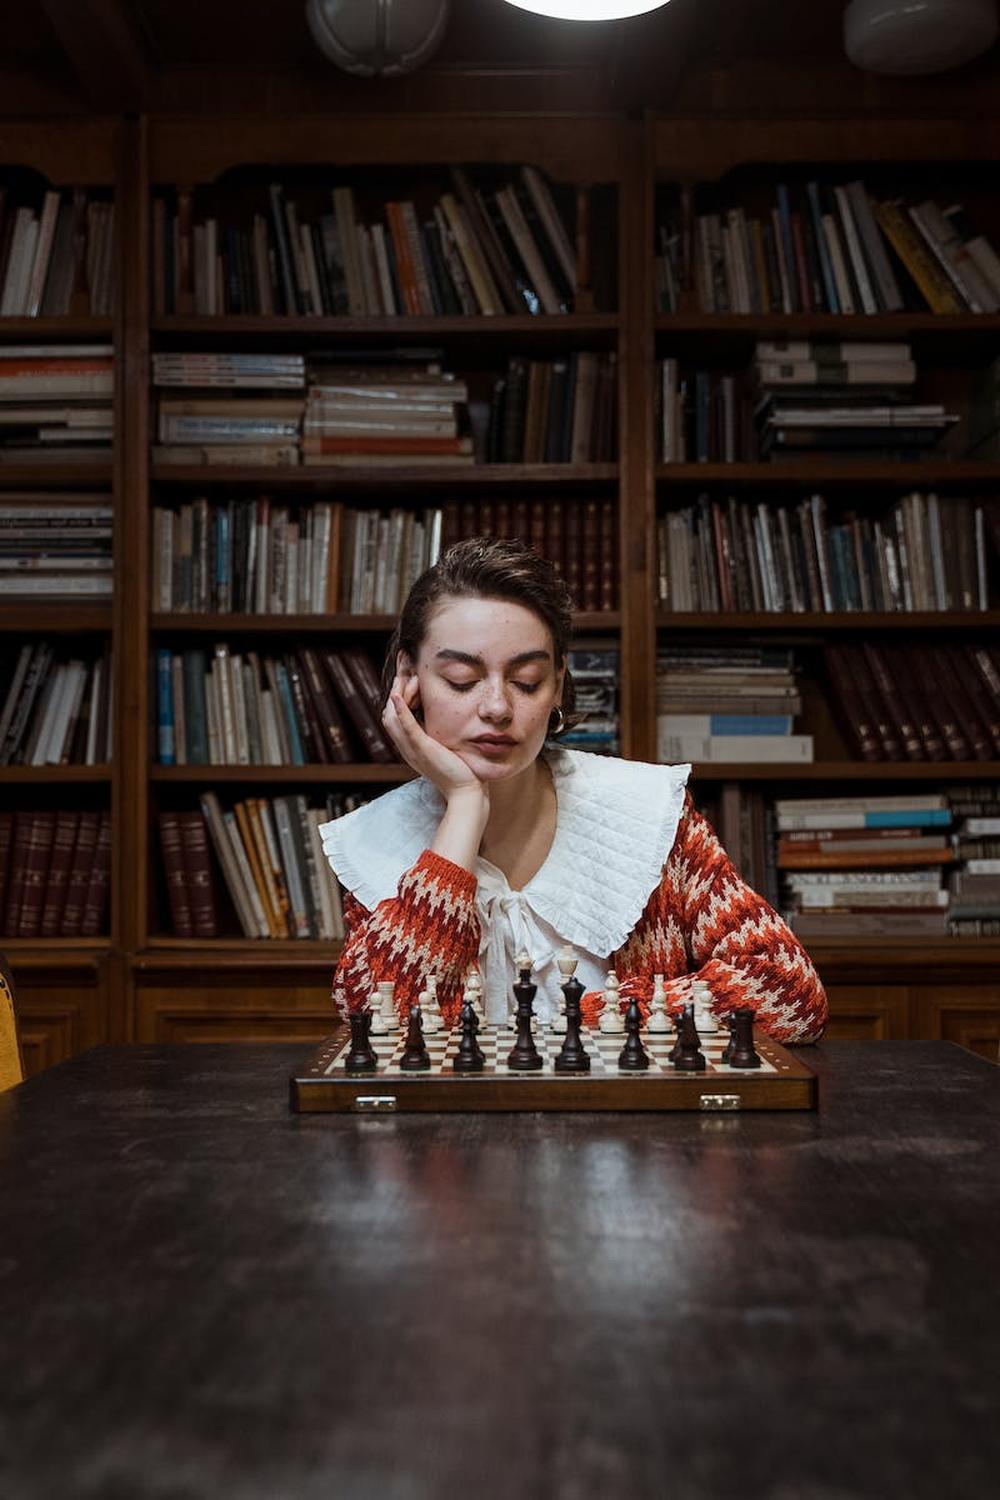 pensive_woman_playing_chess